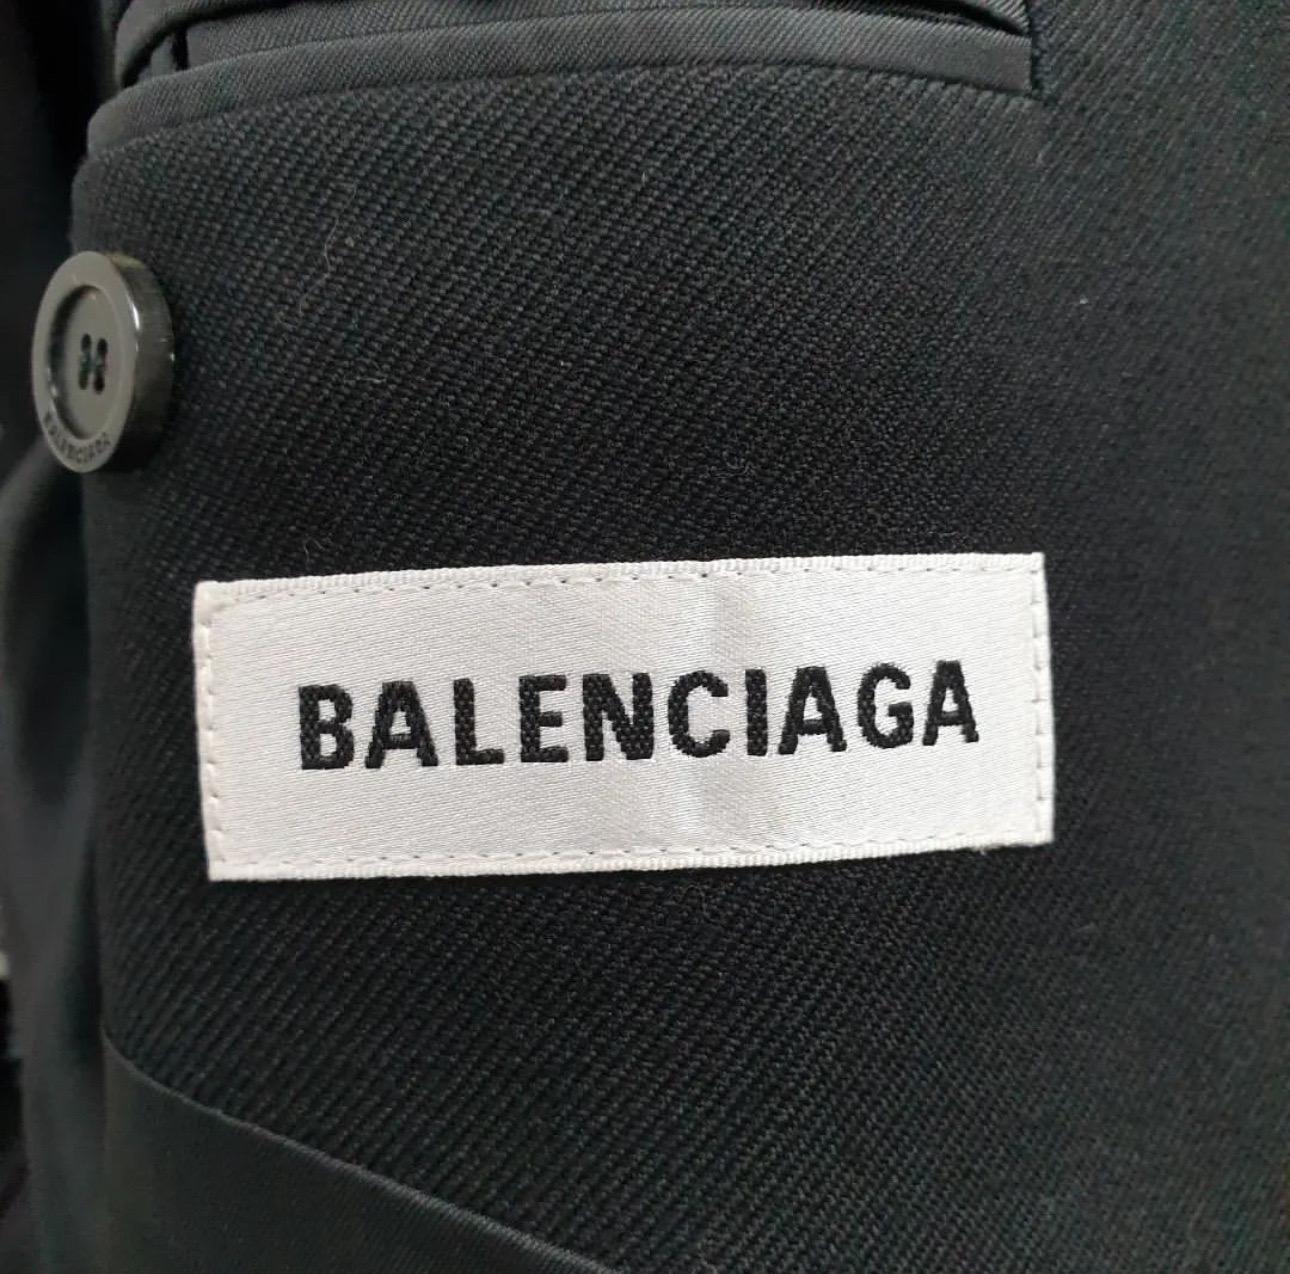 Balenciaga Rhinestone Jacket Blazer In Excellent Condition For Sale In Krakow, PL